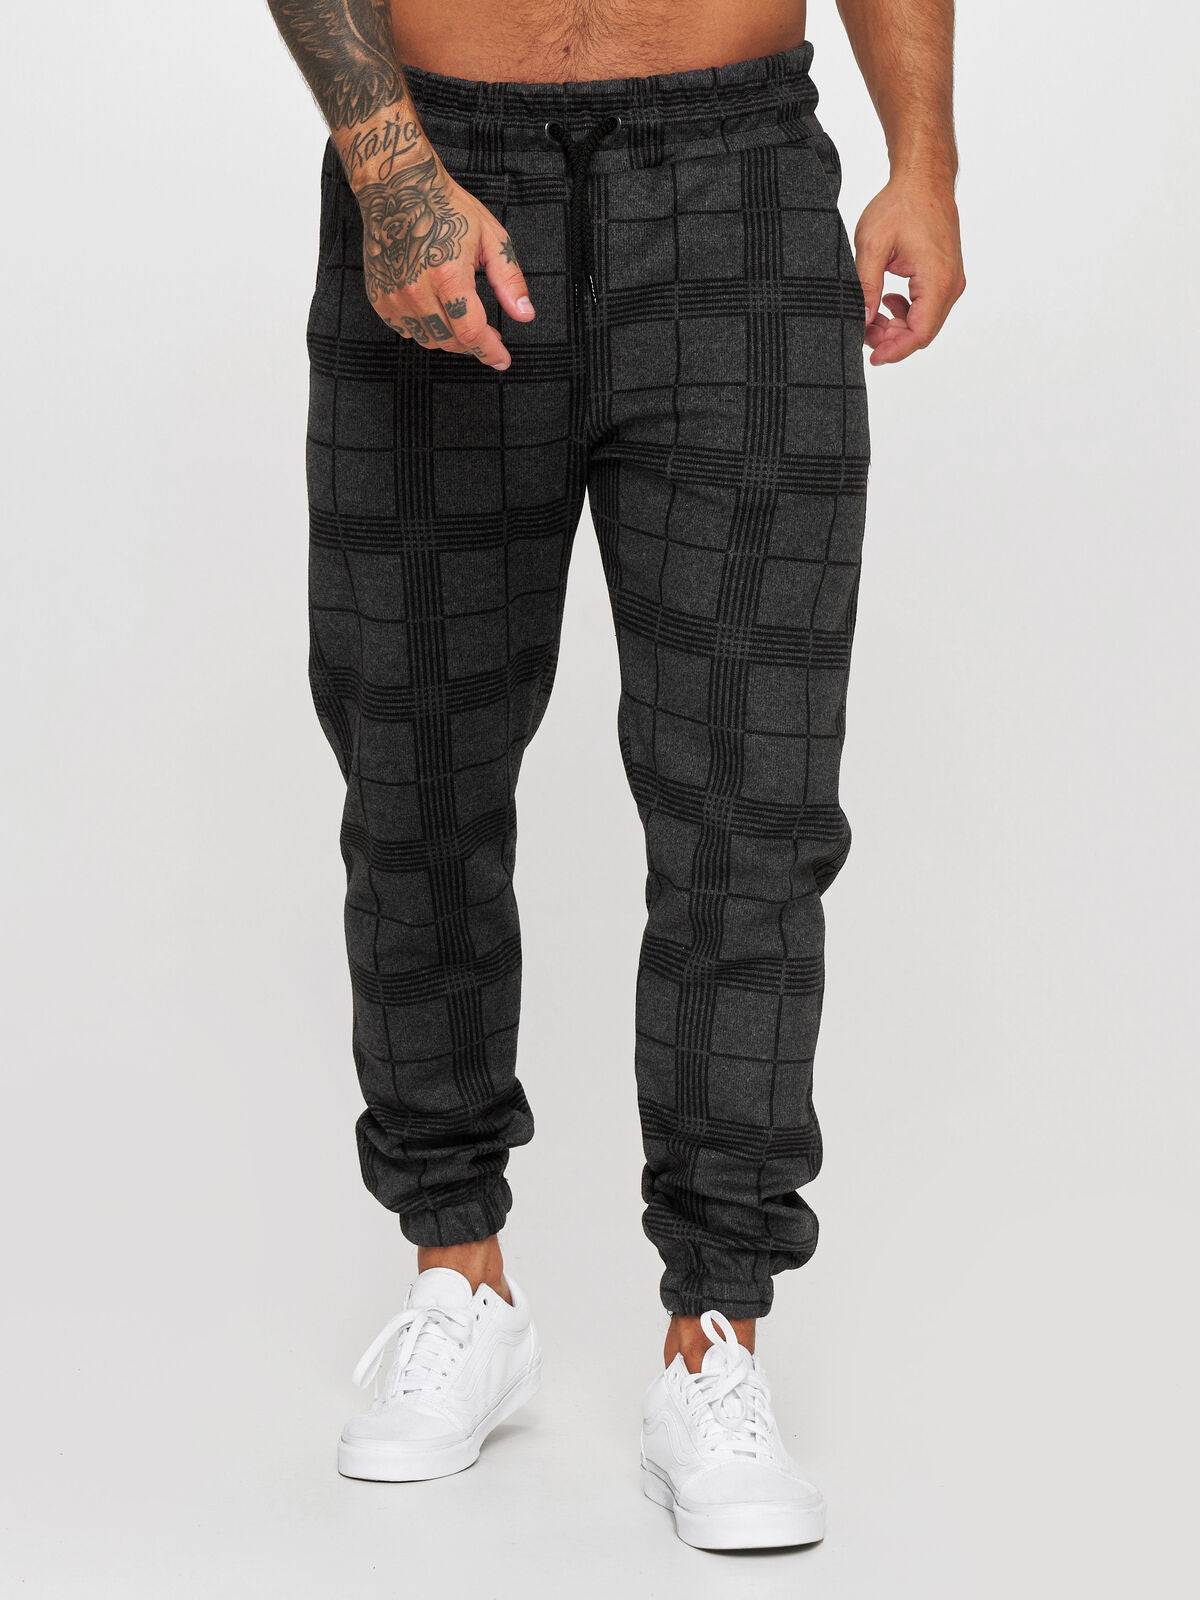 Checkered 3D Digital Print Casual Pants GlamzLife